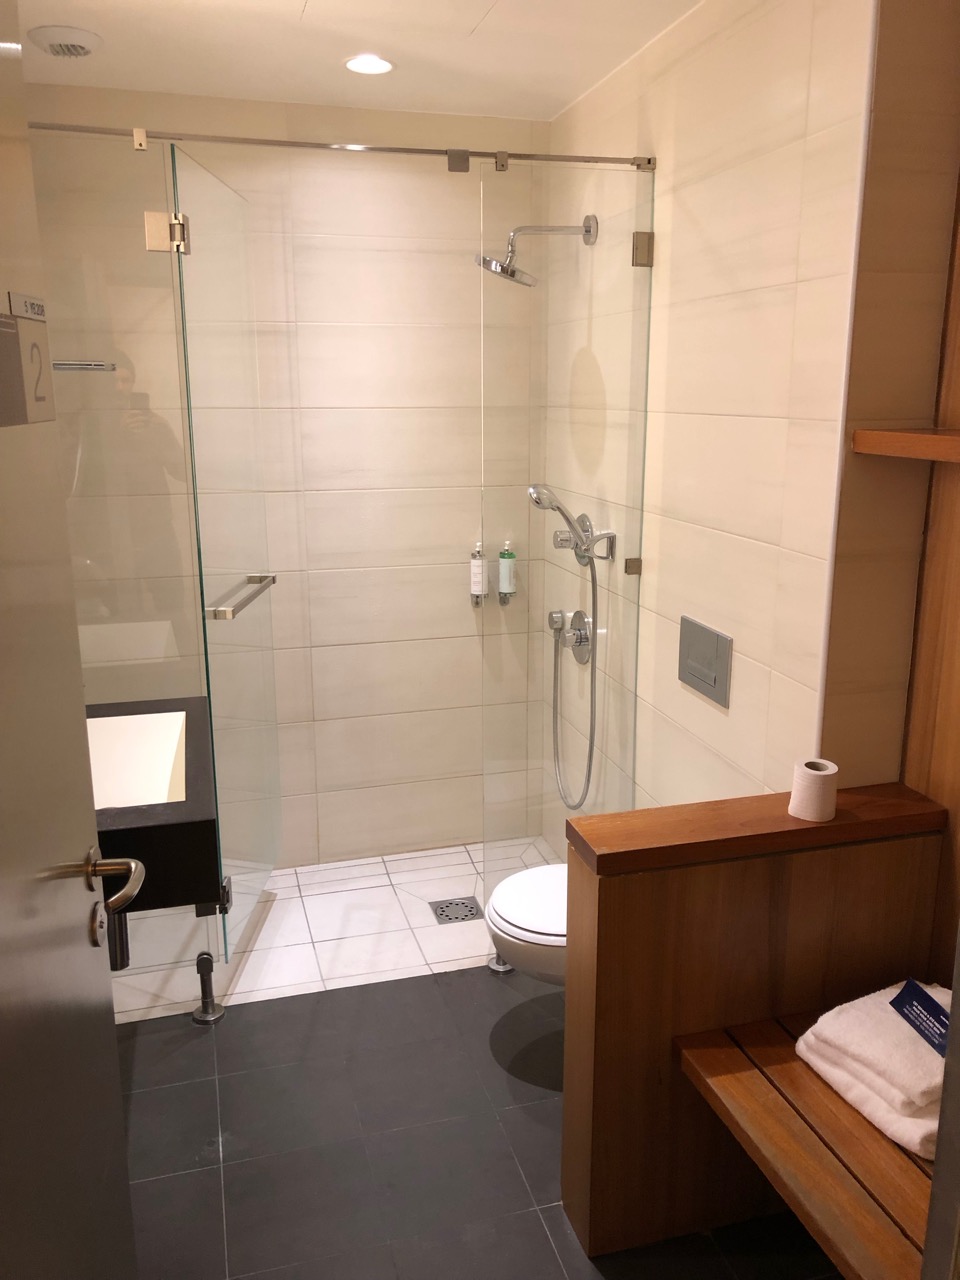 a bathroom with a glass shower door